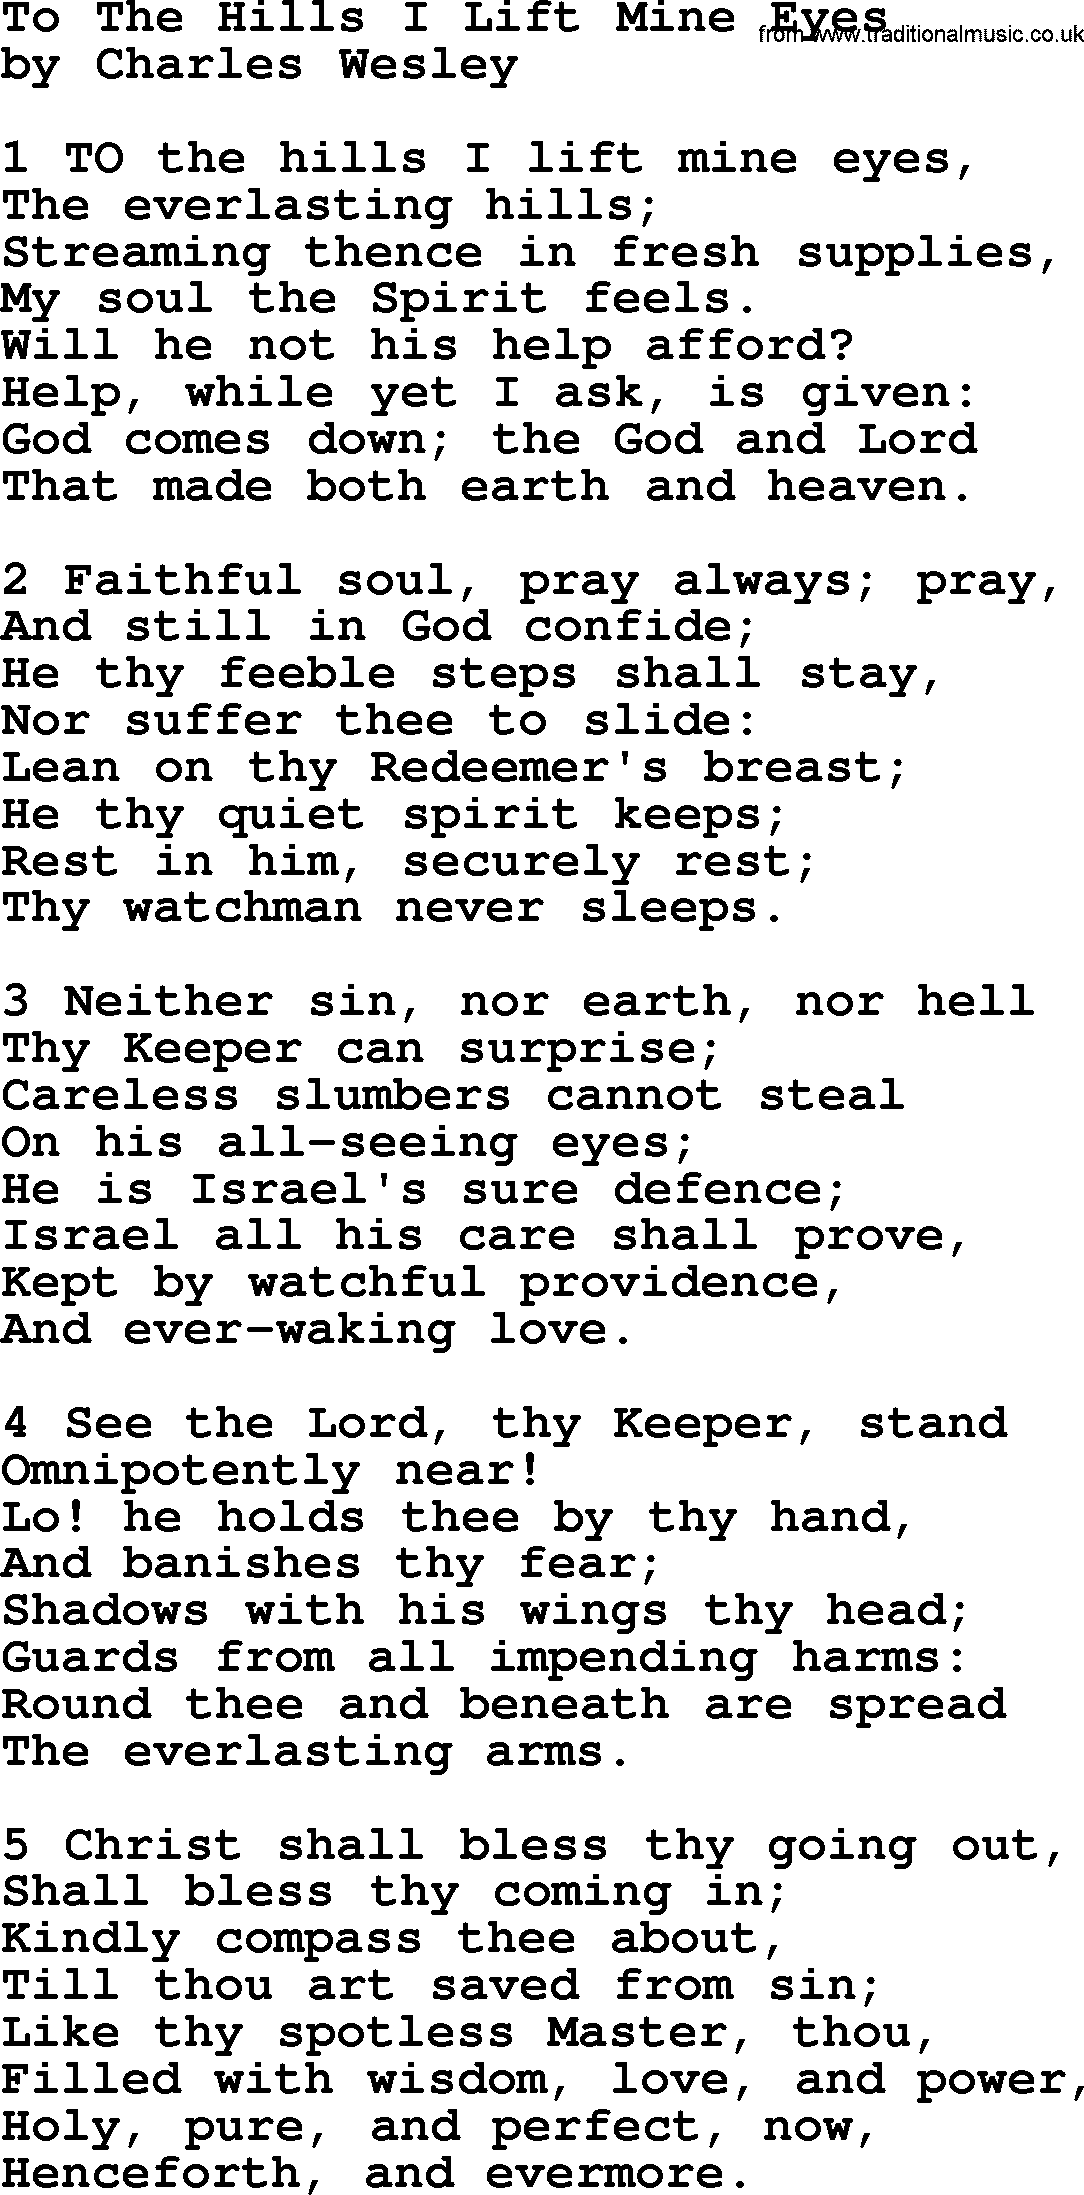 Charles Wesley hymn: To The Hills I Lift Mine Eyes, lyrics